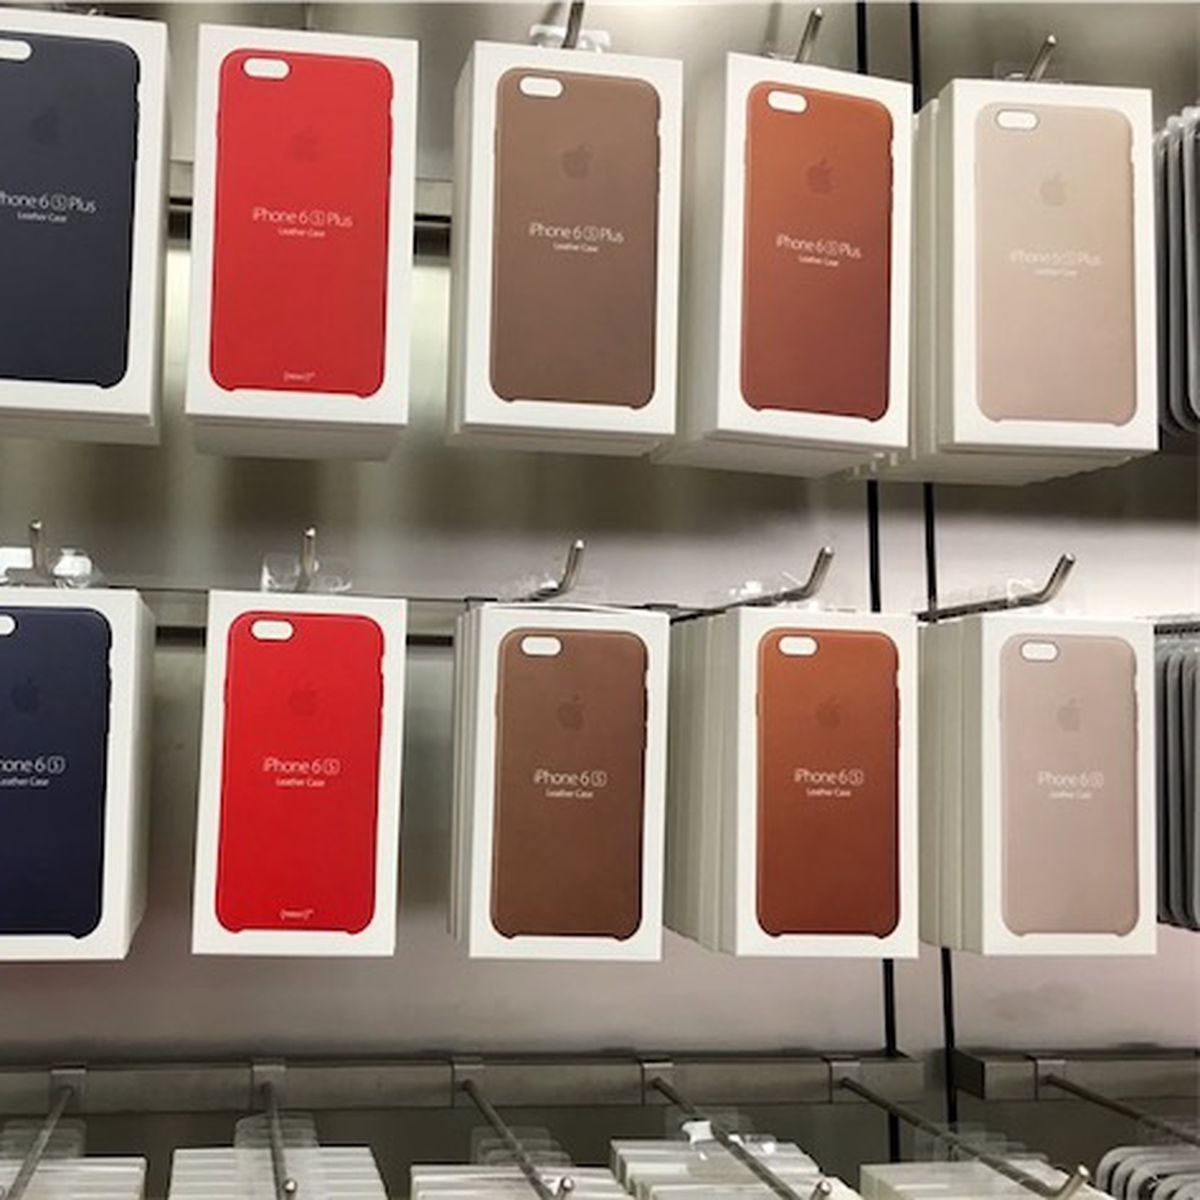 Гб стор айфон. Iphone 6 product Red. Красный чехол на айфон 6. Комплектация айфон 6s красный. Apple Store Cases.